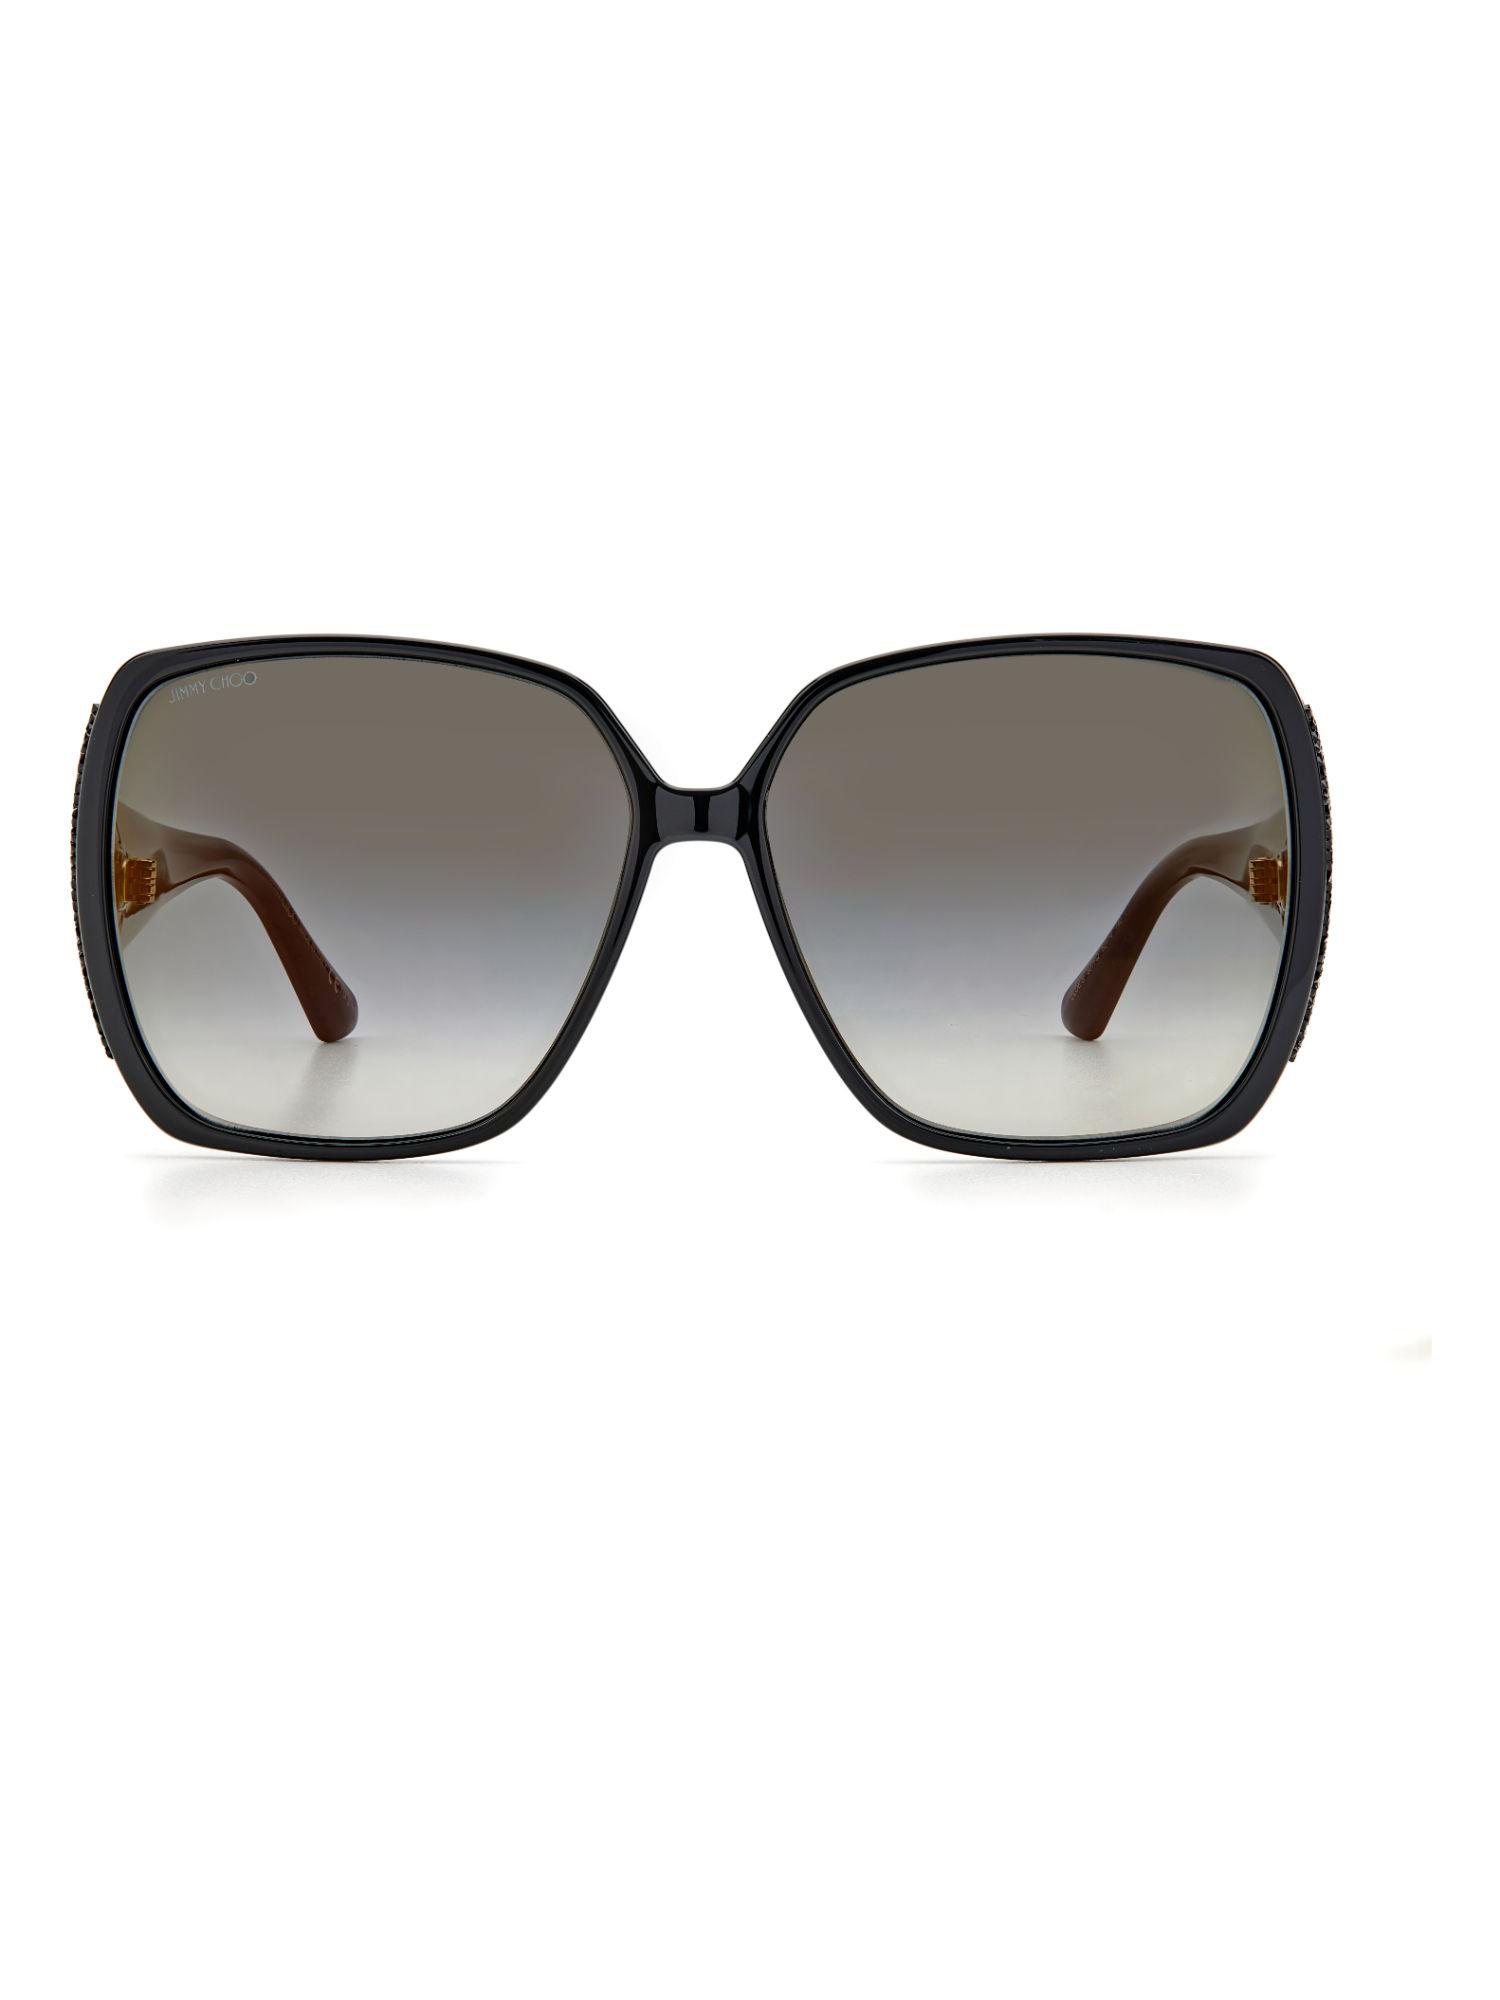 20374280762fq women square shape grey lens sunglasses